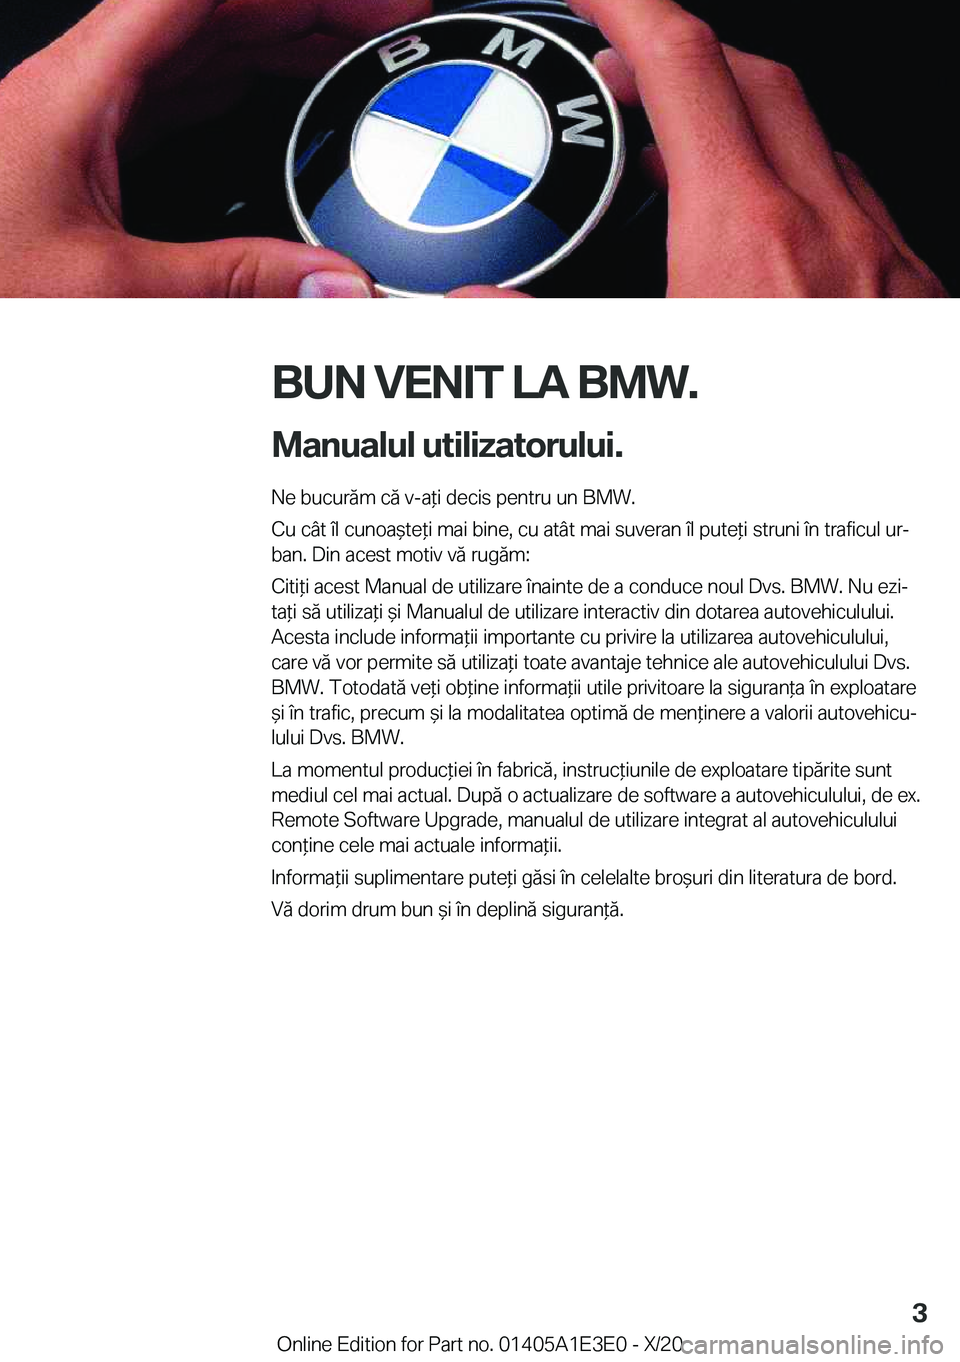 BMW M4 2021  Ghiduri De Utilizare (in Romanian) �B�U�N��V�E�N�I�T��L�A��B�M�W�.�M�a�n�u�a�l�u�l��u�t�i�l�i�z�a�t�o�r�u�l�u�i�.
�N�e��b�u�c�u�r�ă�m��c�ă��v�-�a*�i��d�e�c�i�s��p�e�n�t�r�u��u�n��B�M�W�.
�C�u��c�